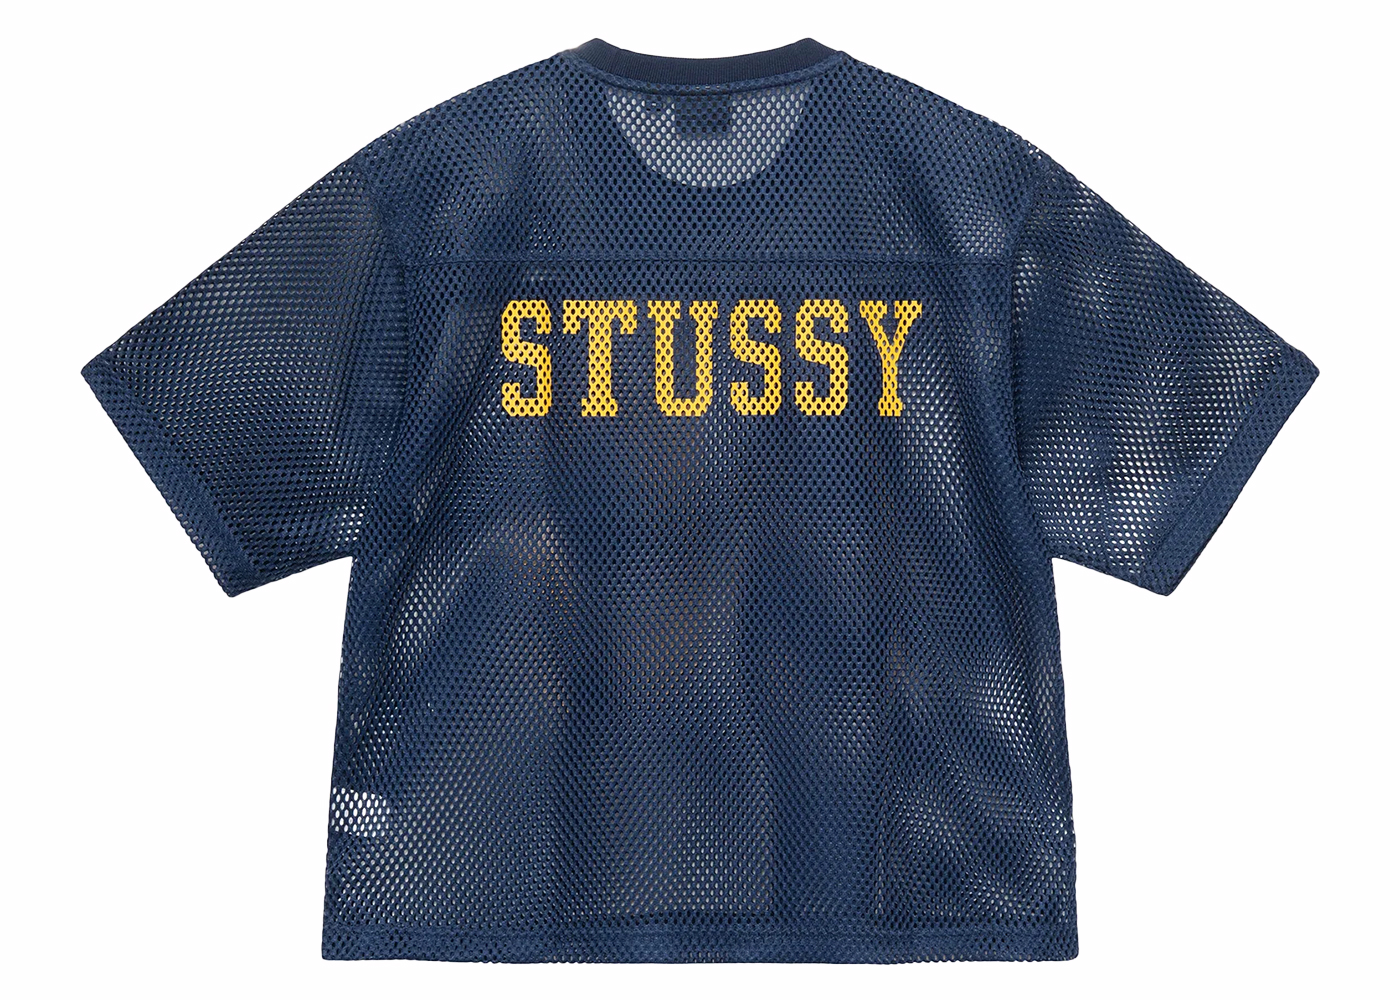 Stussy Team 80 Jersey Navy